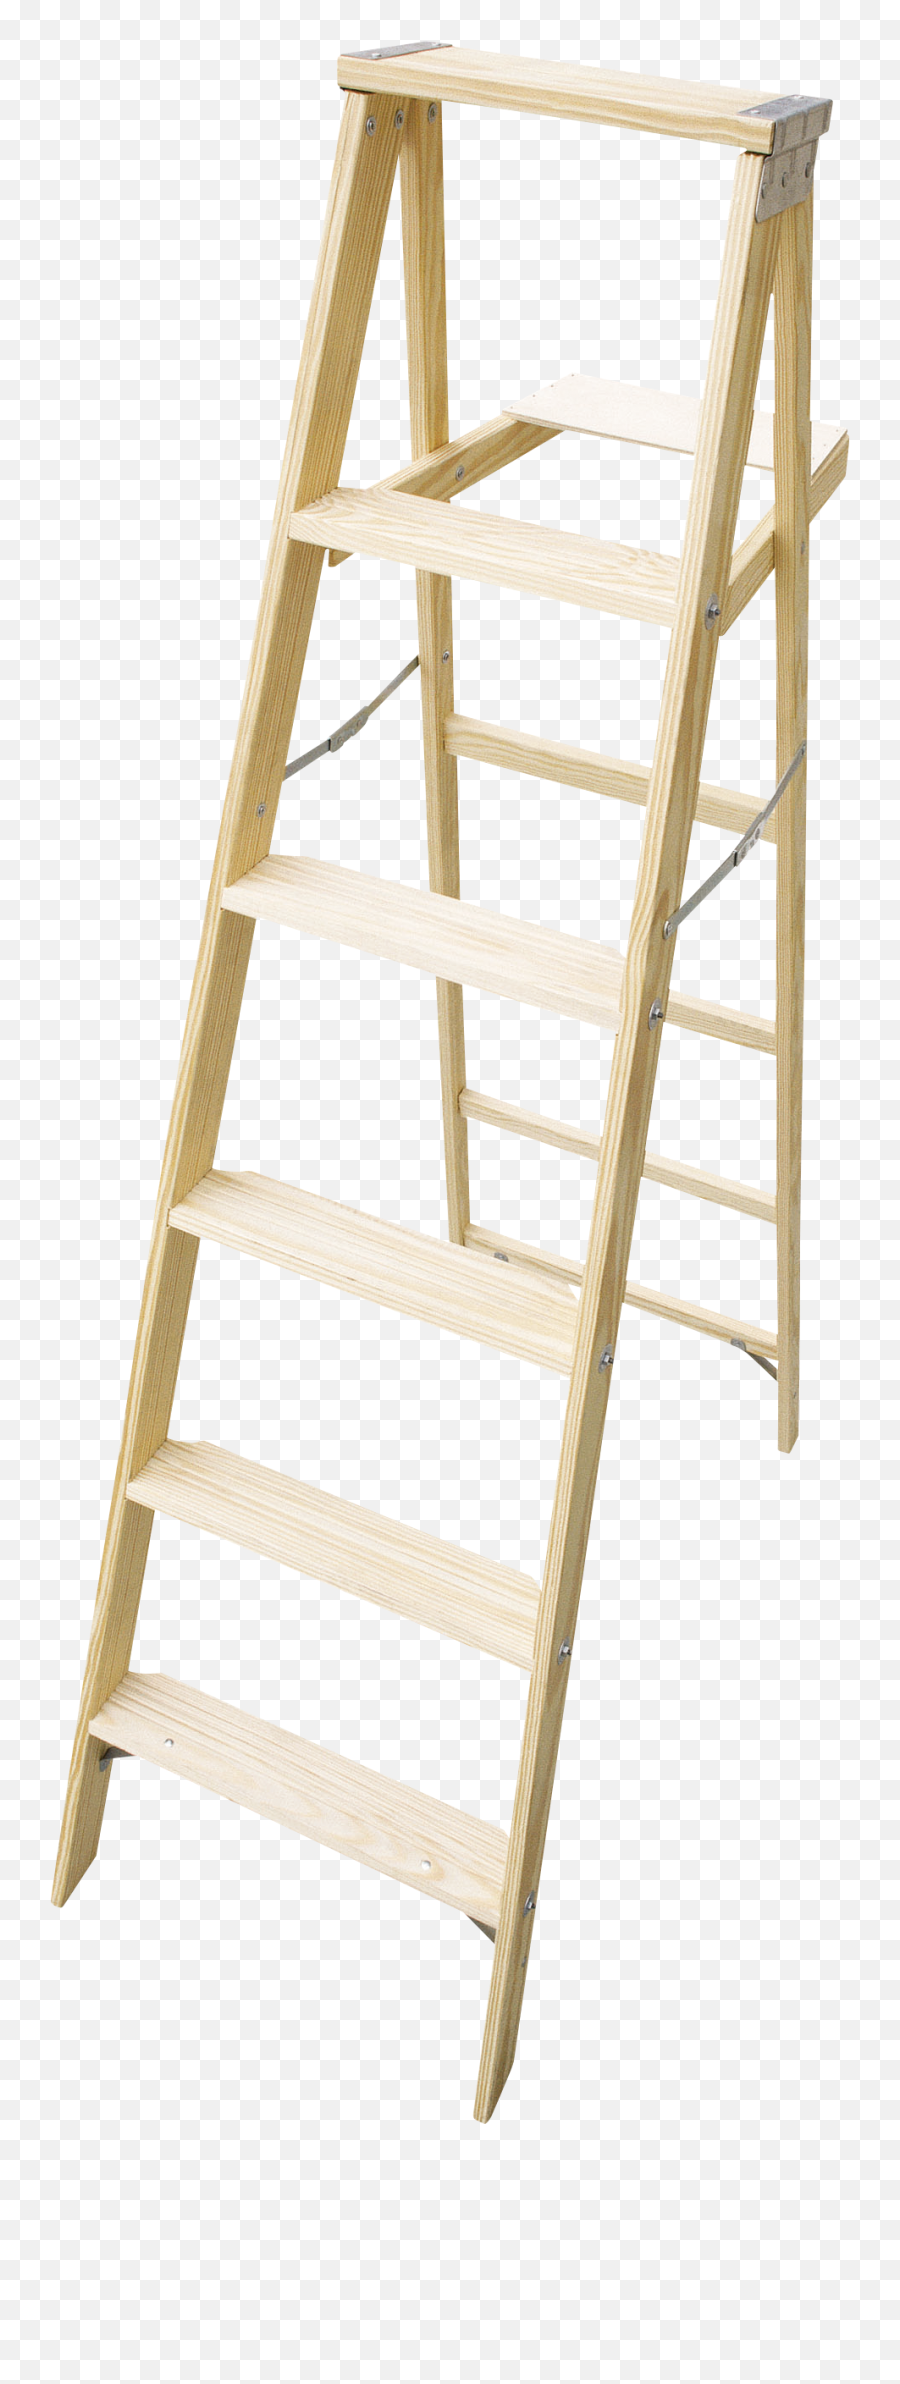 Ladder Icon 91632 - Web Icons Png Escaleras De Madera Para Subir,Ladder Icon